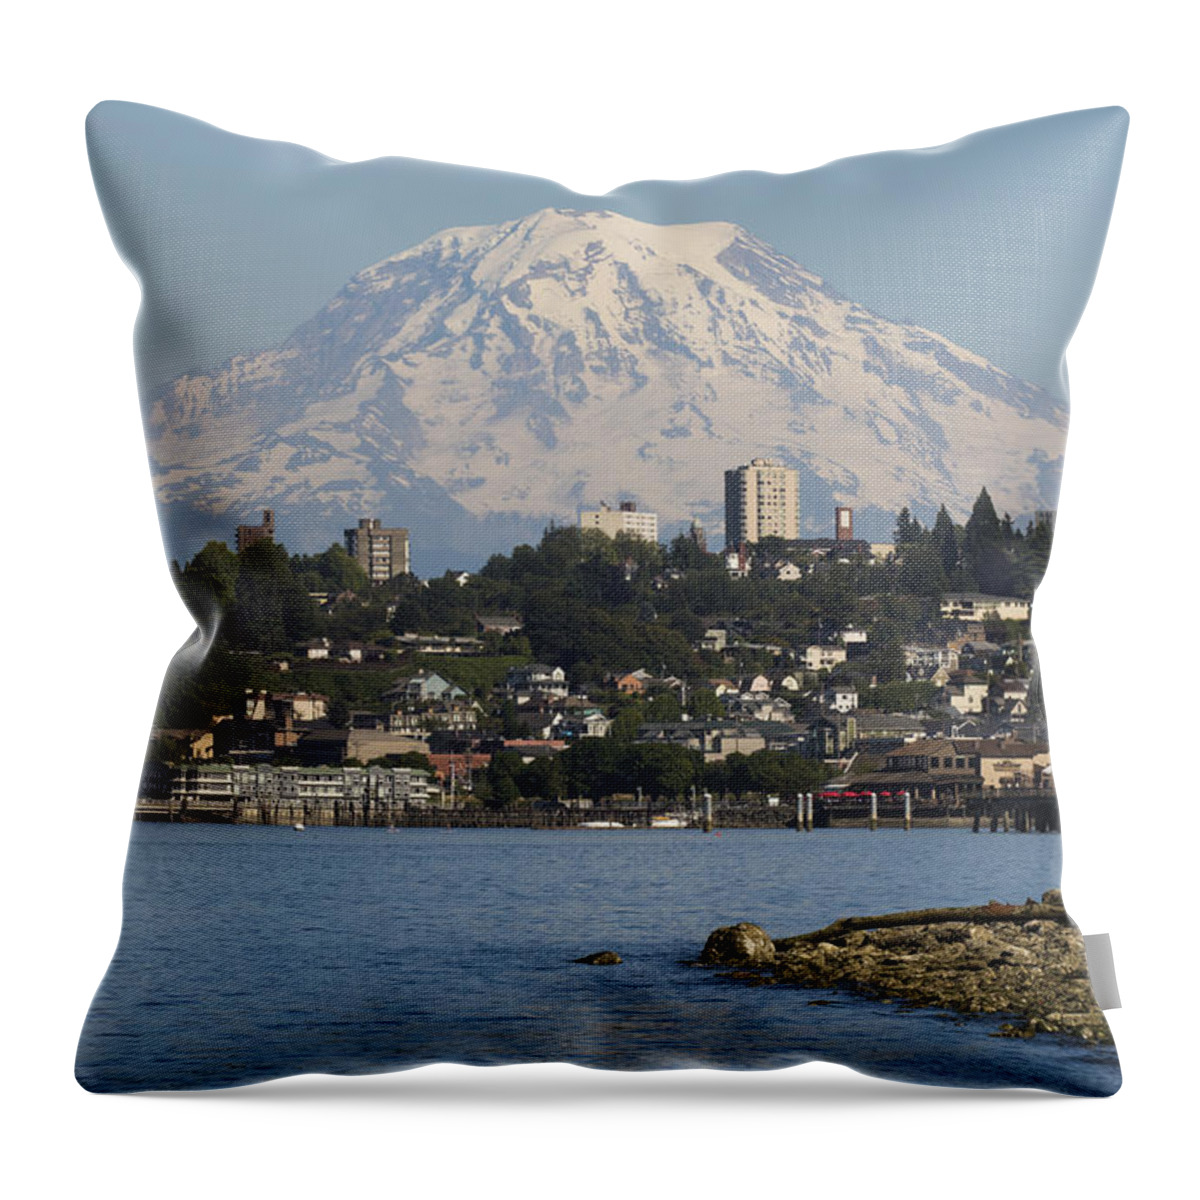 Mount Rainier Throw Pillow featuring the photograph The view of Mount Rainier from Ruston Way by Matt McDonald